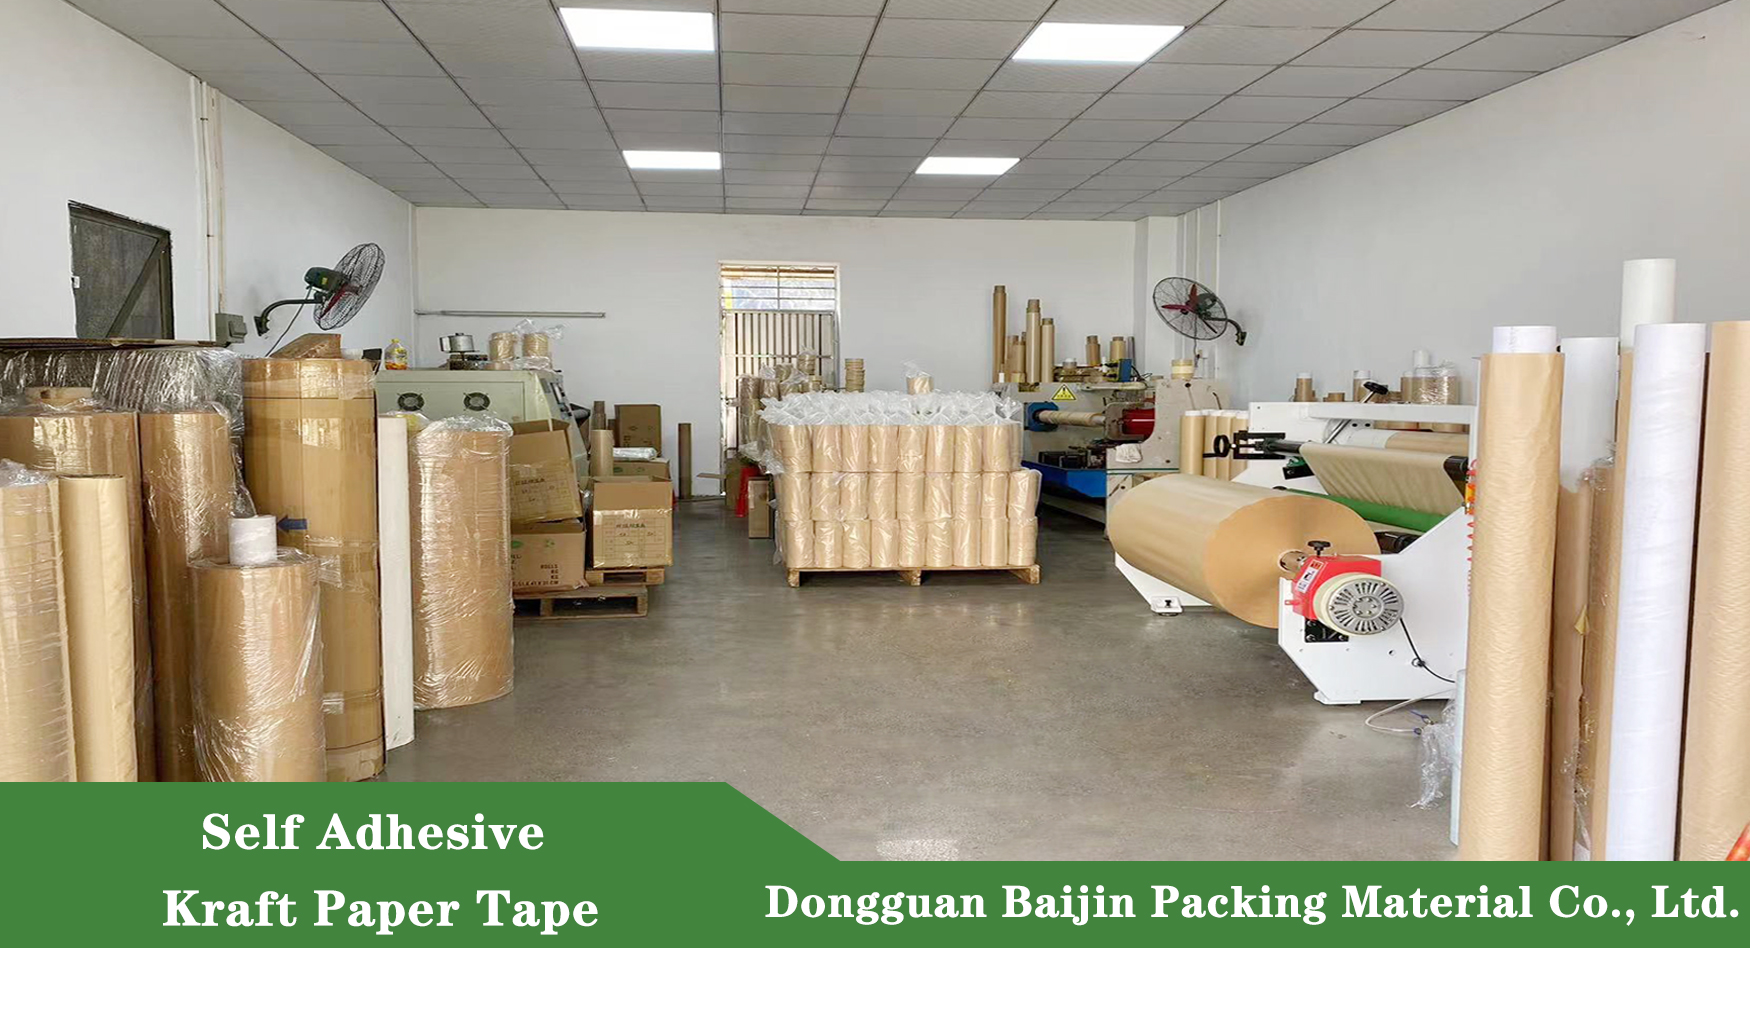 Baijin-Where هي الشركة المصنعة لشريط ورق الكرافت ذاتية اللصق في الصين